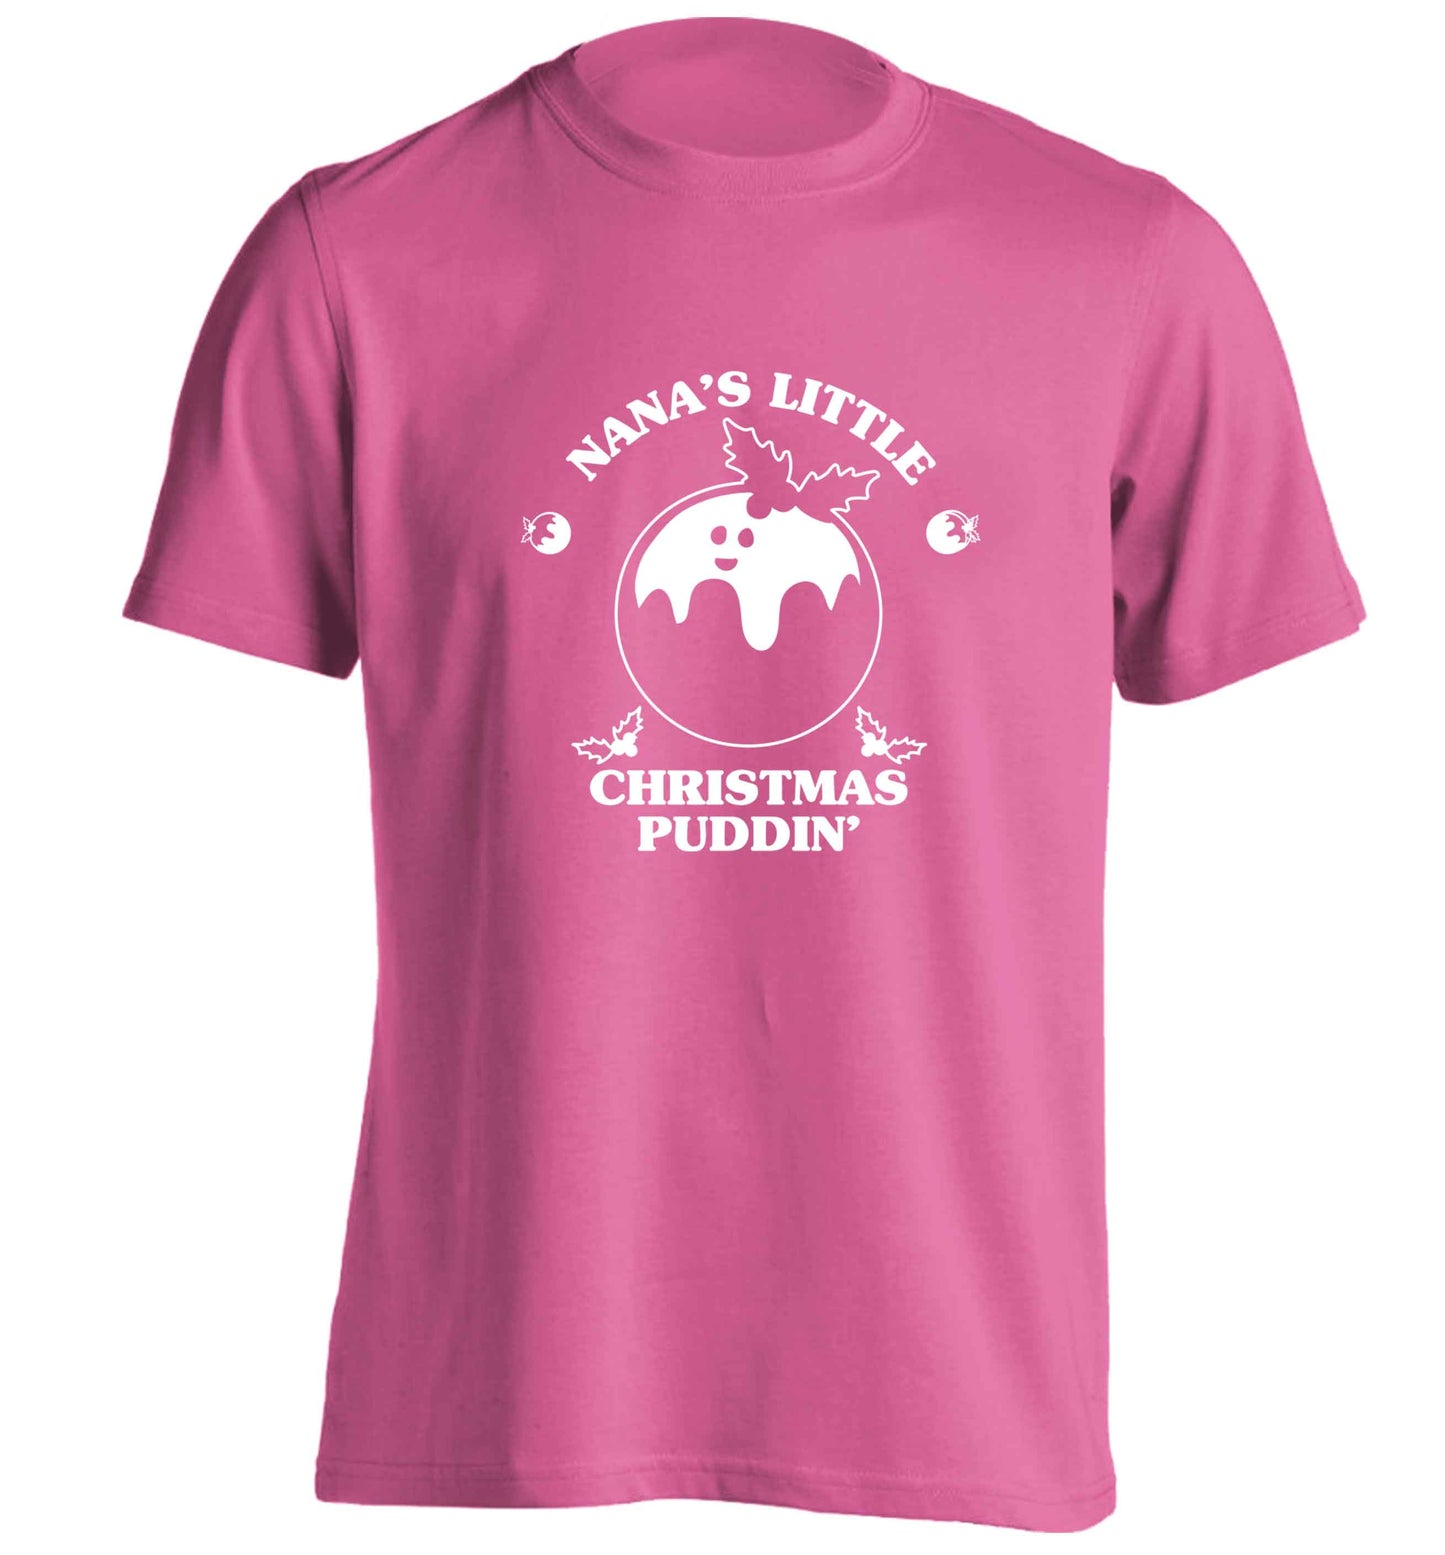 Nana's little Christmas puddin' adults unisex pink Tshirt 2XL